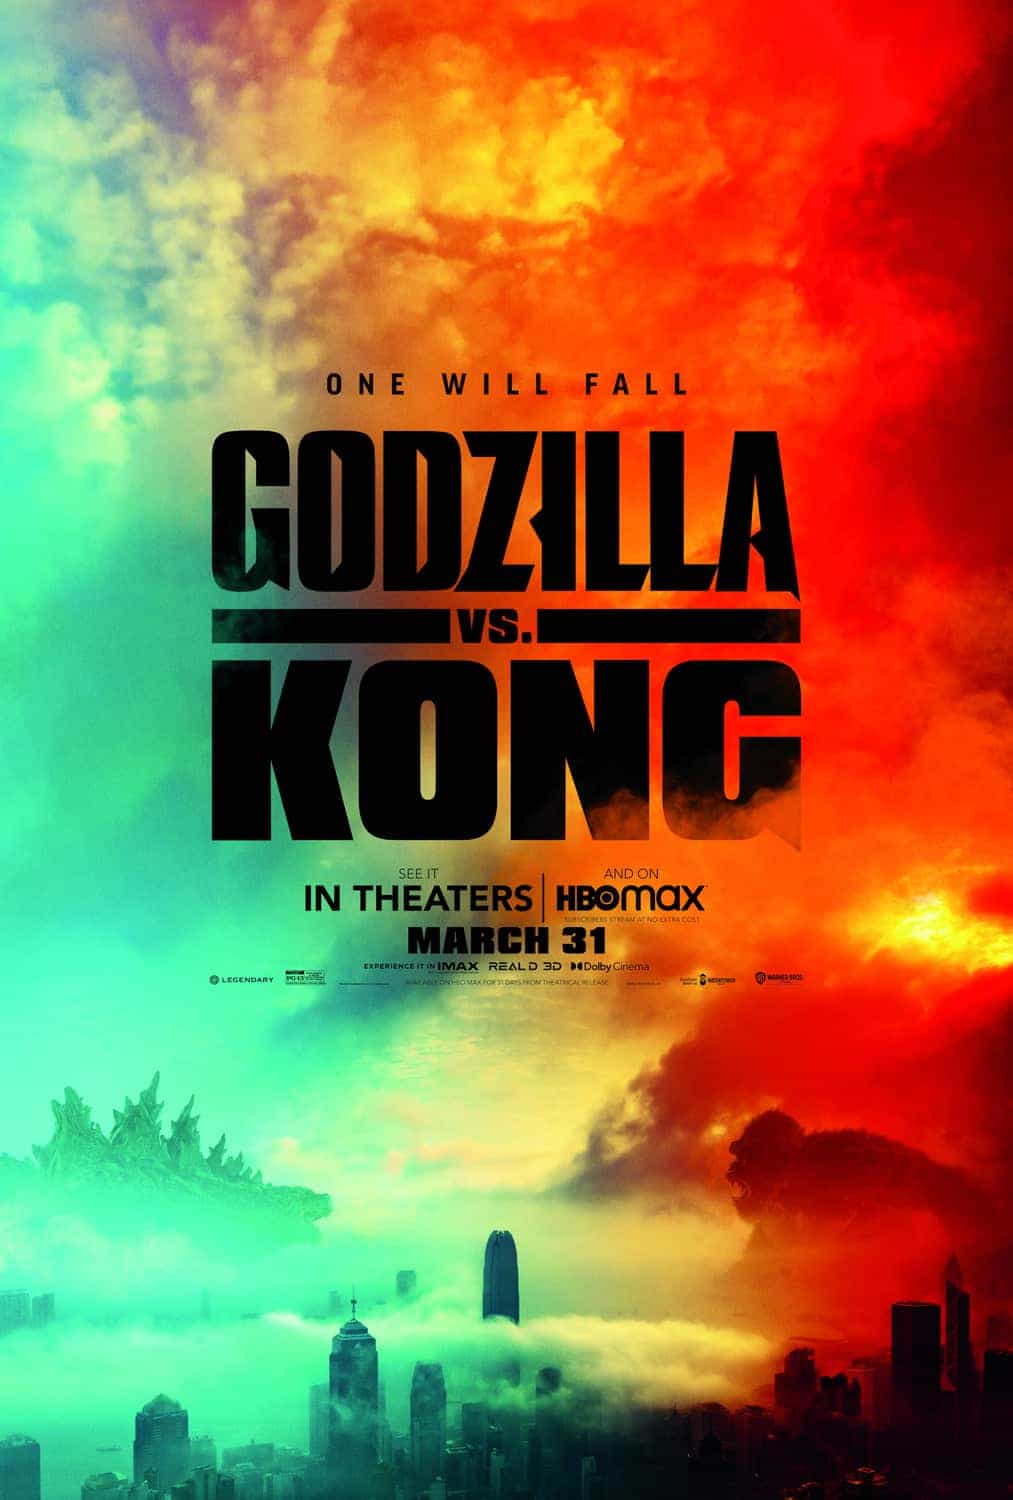 New poster release for Godzilla Vs. Kong starring Alexander Skarsgard - movie release date 21st March 2021